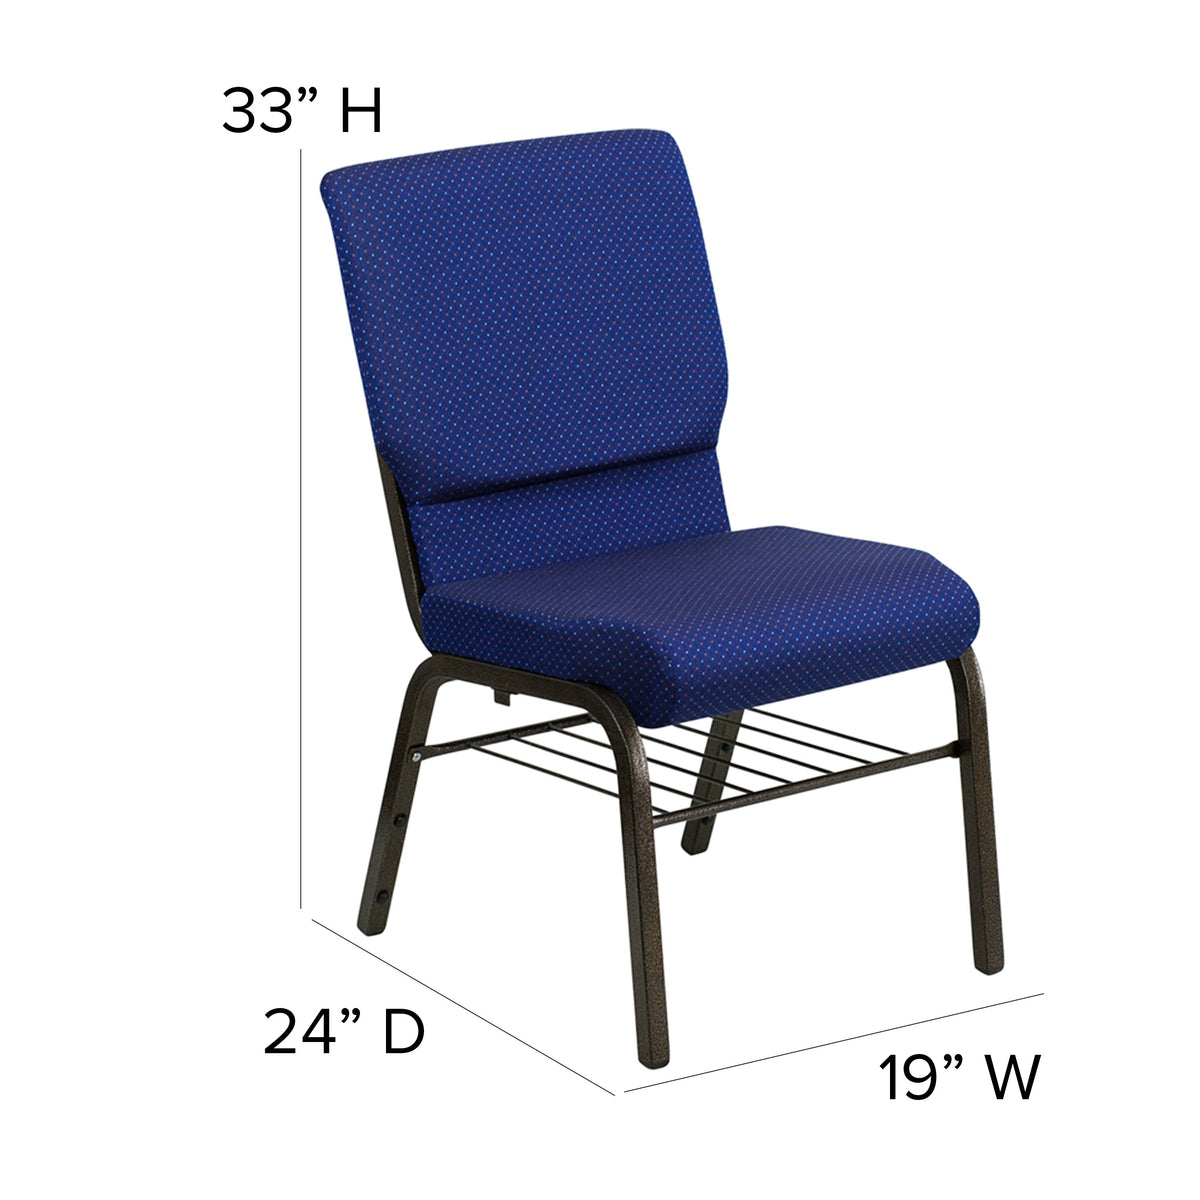 Auditorium Chair - 19inch Seat - Navy Dot Fabric/Gold Vein Frame - Book Rack